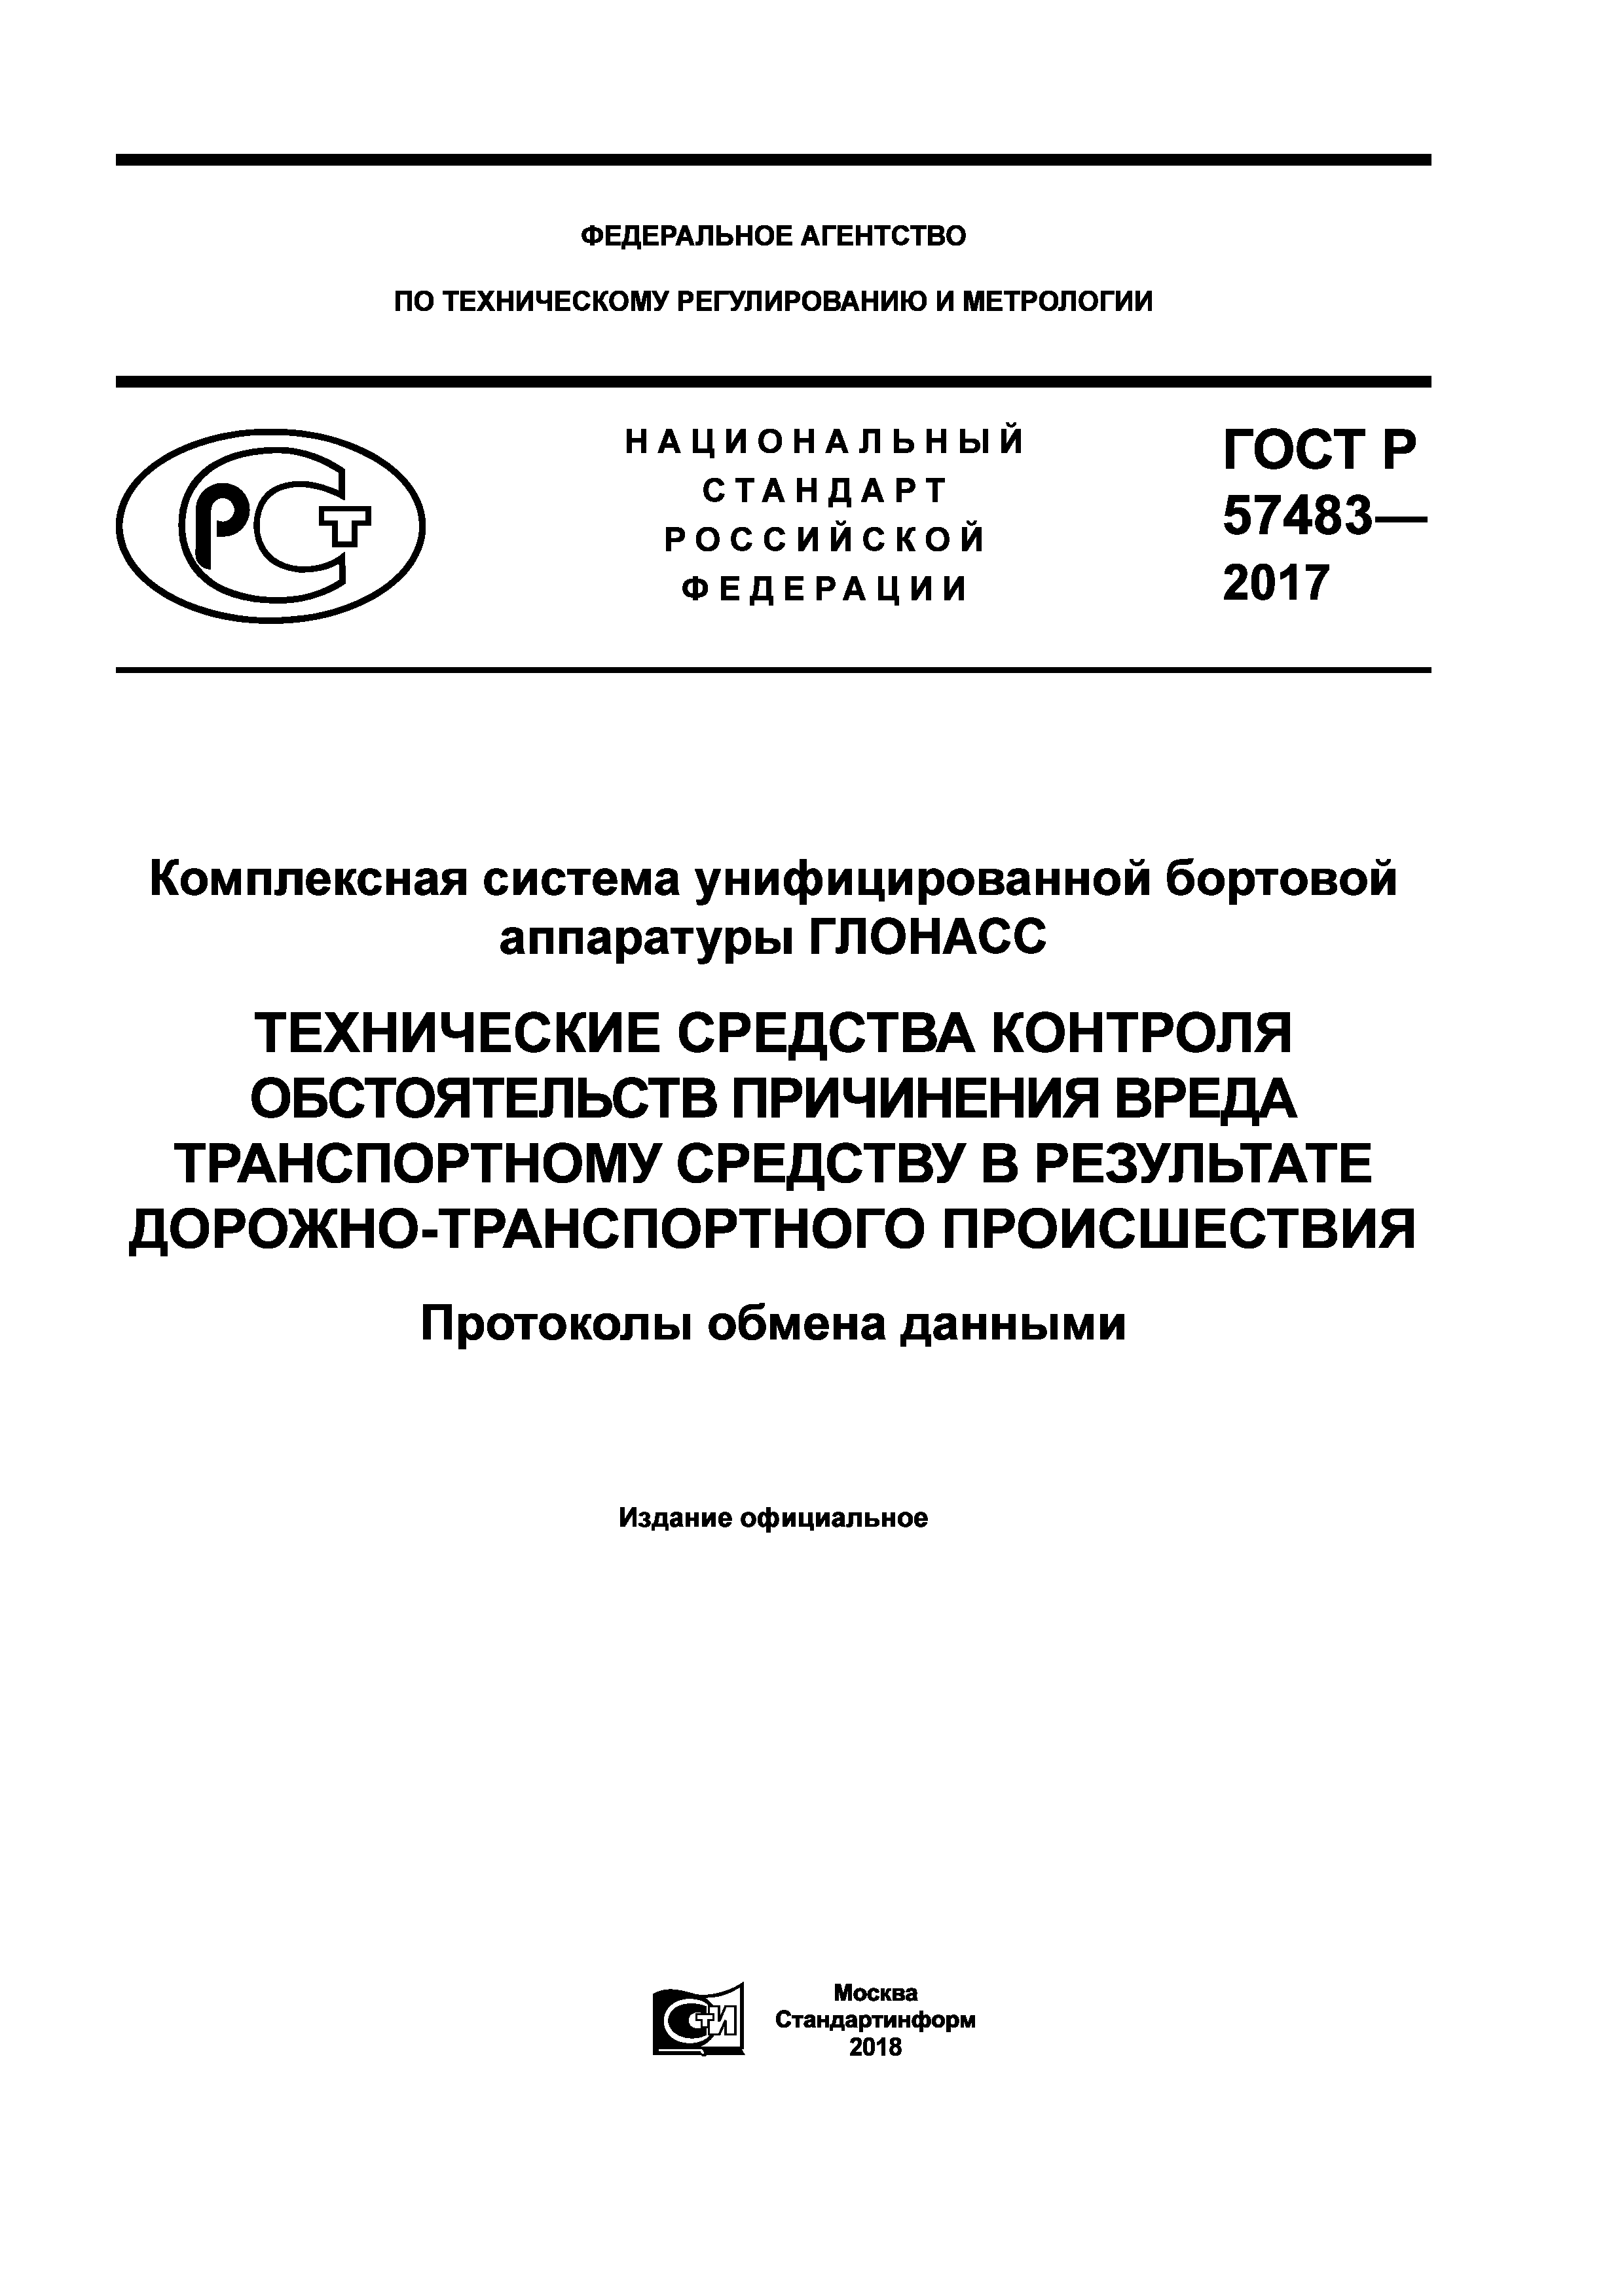 ГОСТ Р 57483-2017